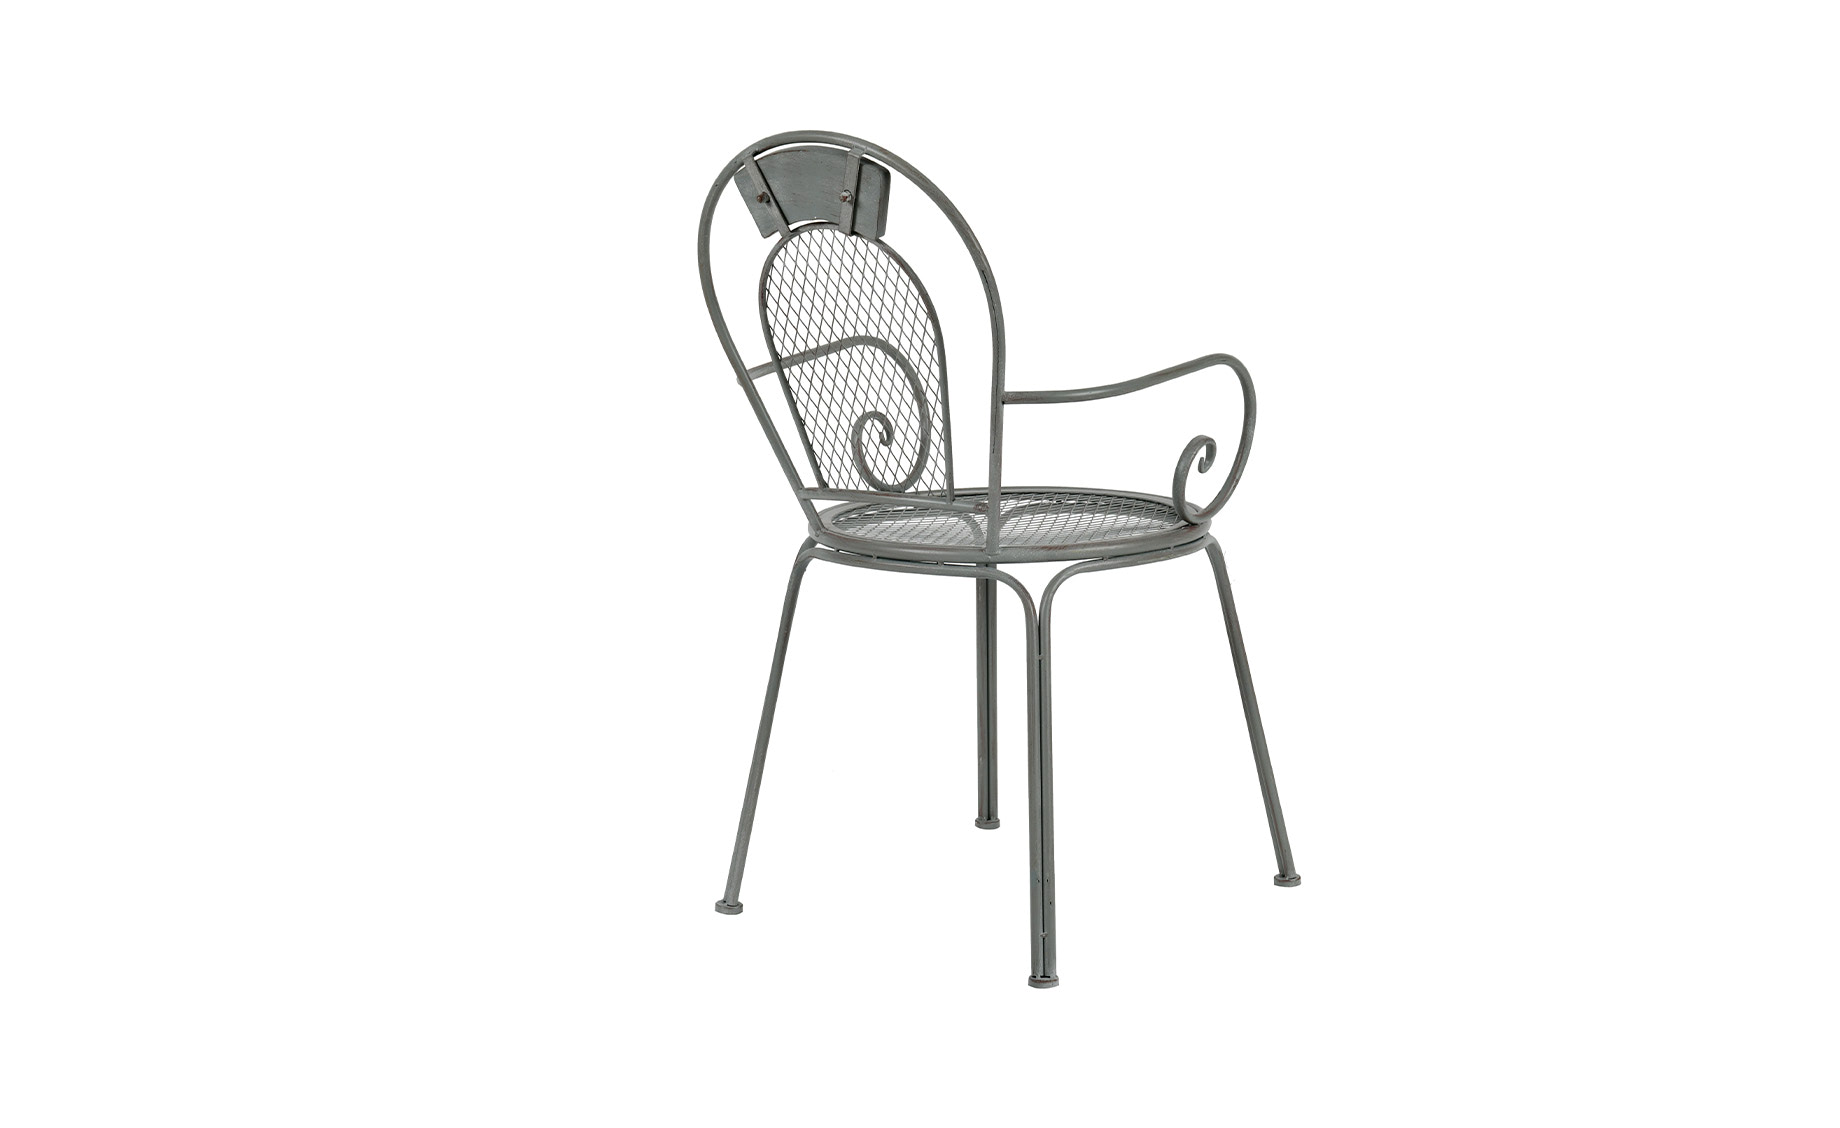 Stolica Bolero sa rukonaslonima 52x58x88cm sivi metal